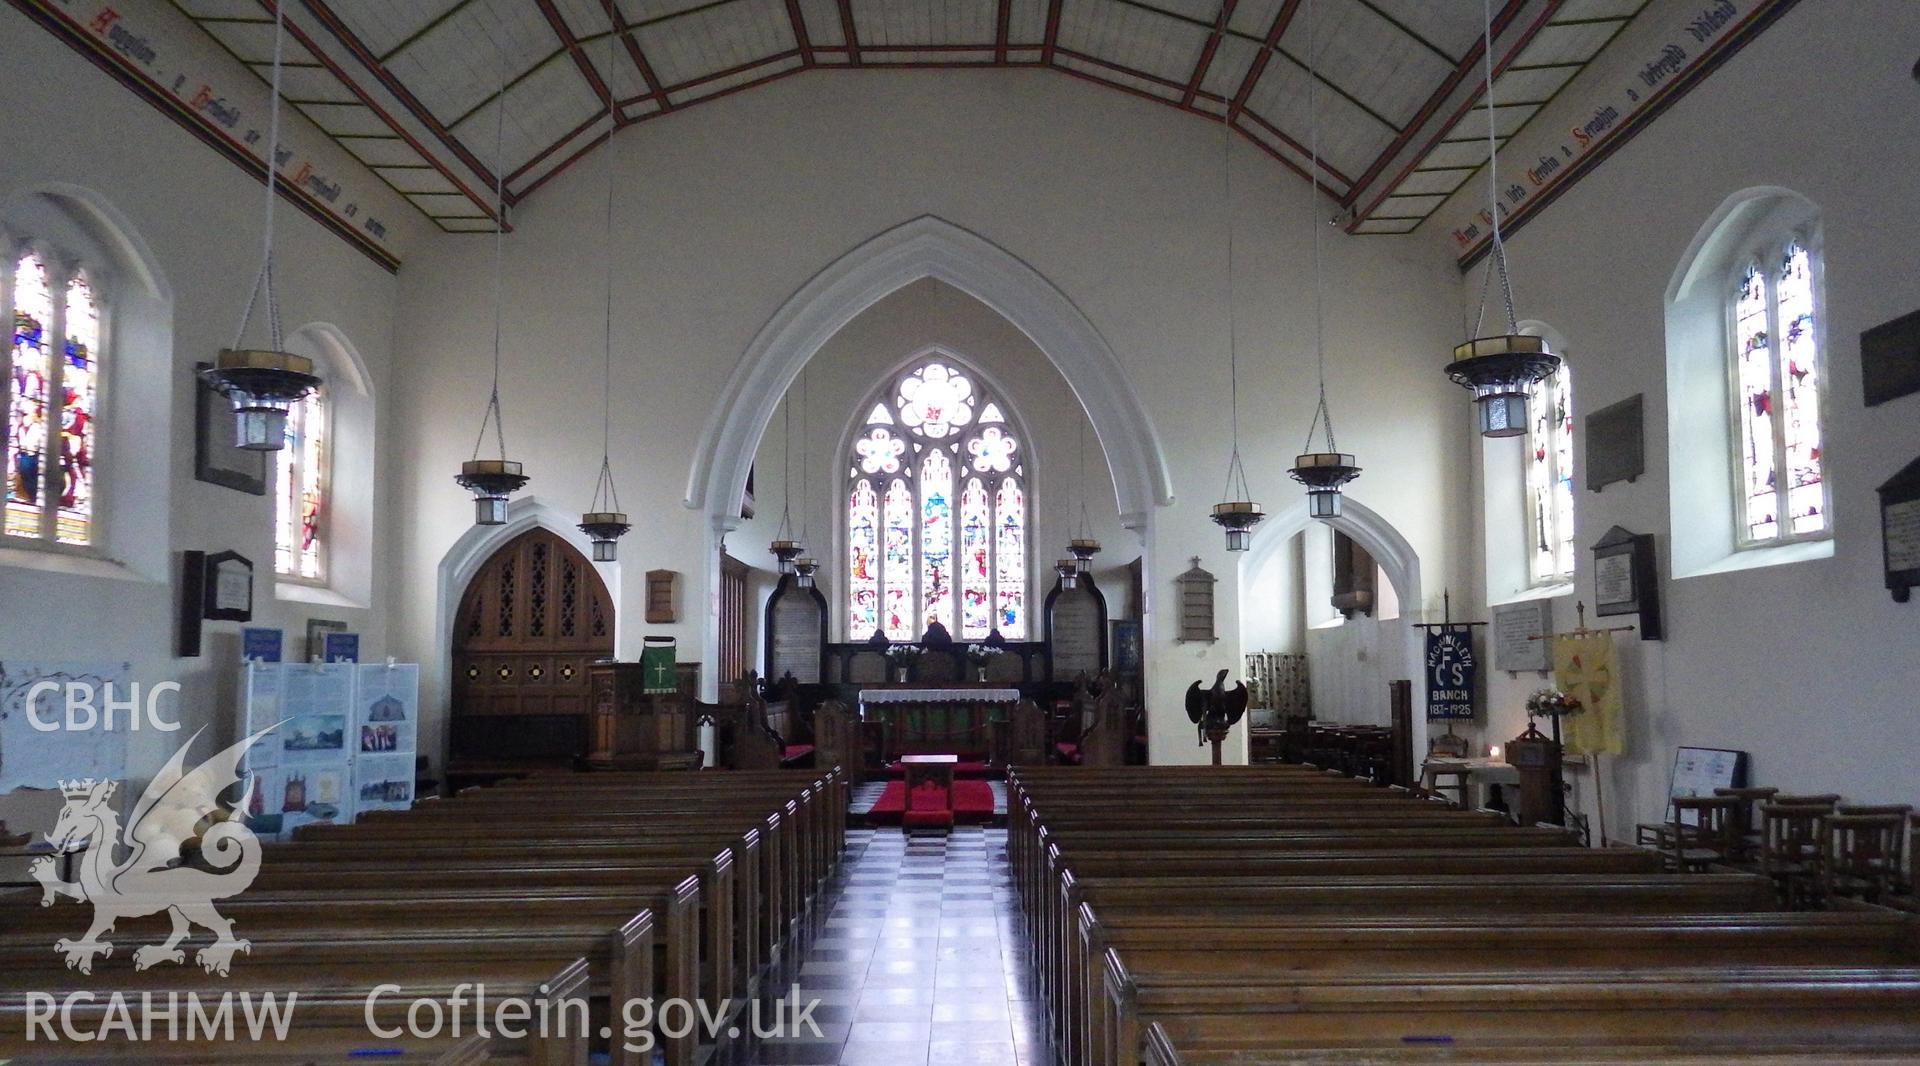 Interior view looking eastward along nave